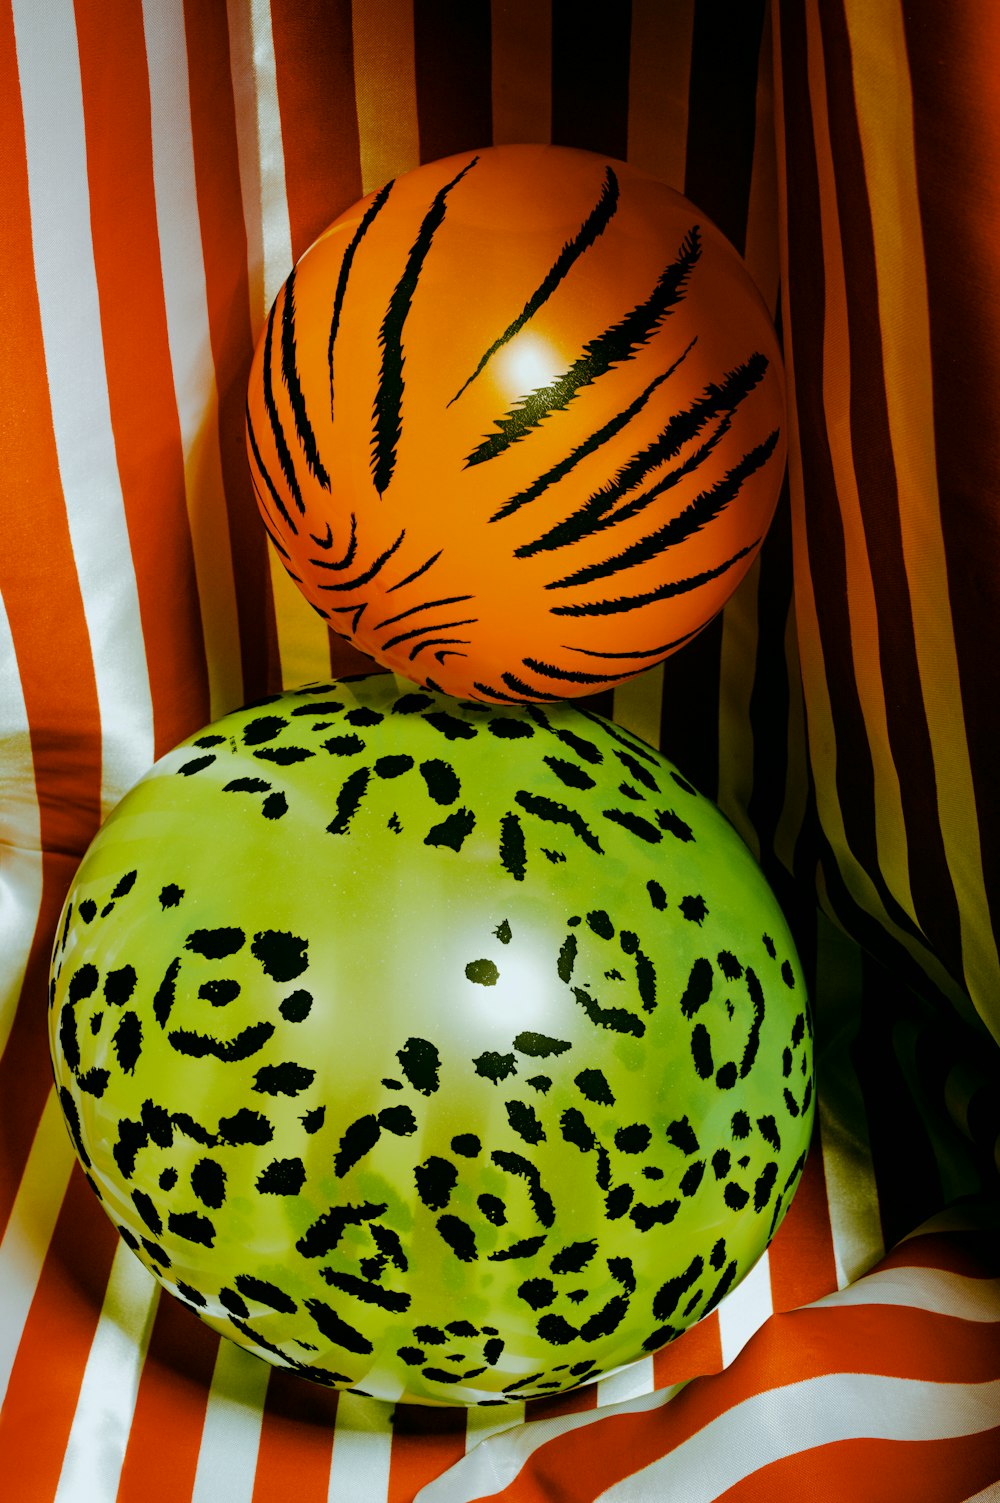 due palline arancioni e verdi sedute una sopra l'altra